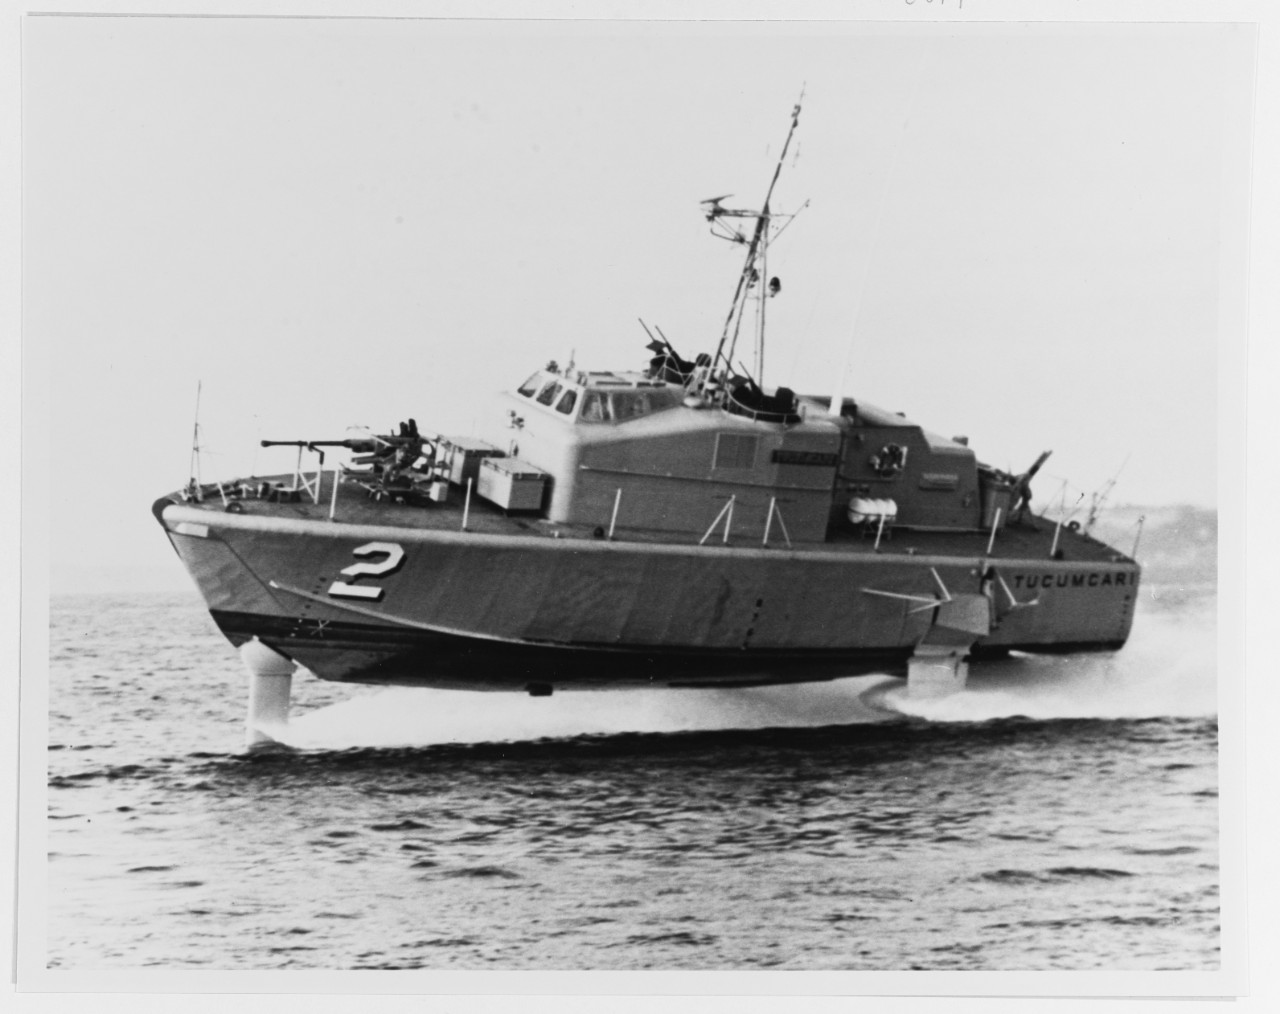 USS TUCUMCARI (PGH-2)